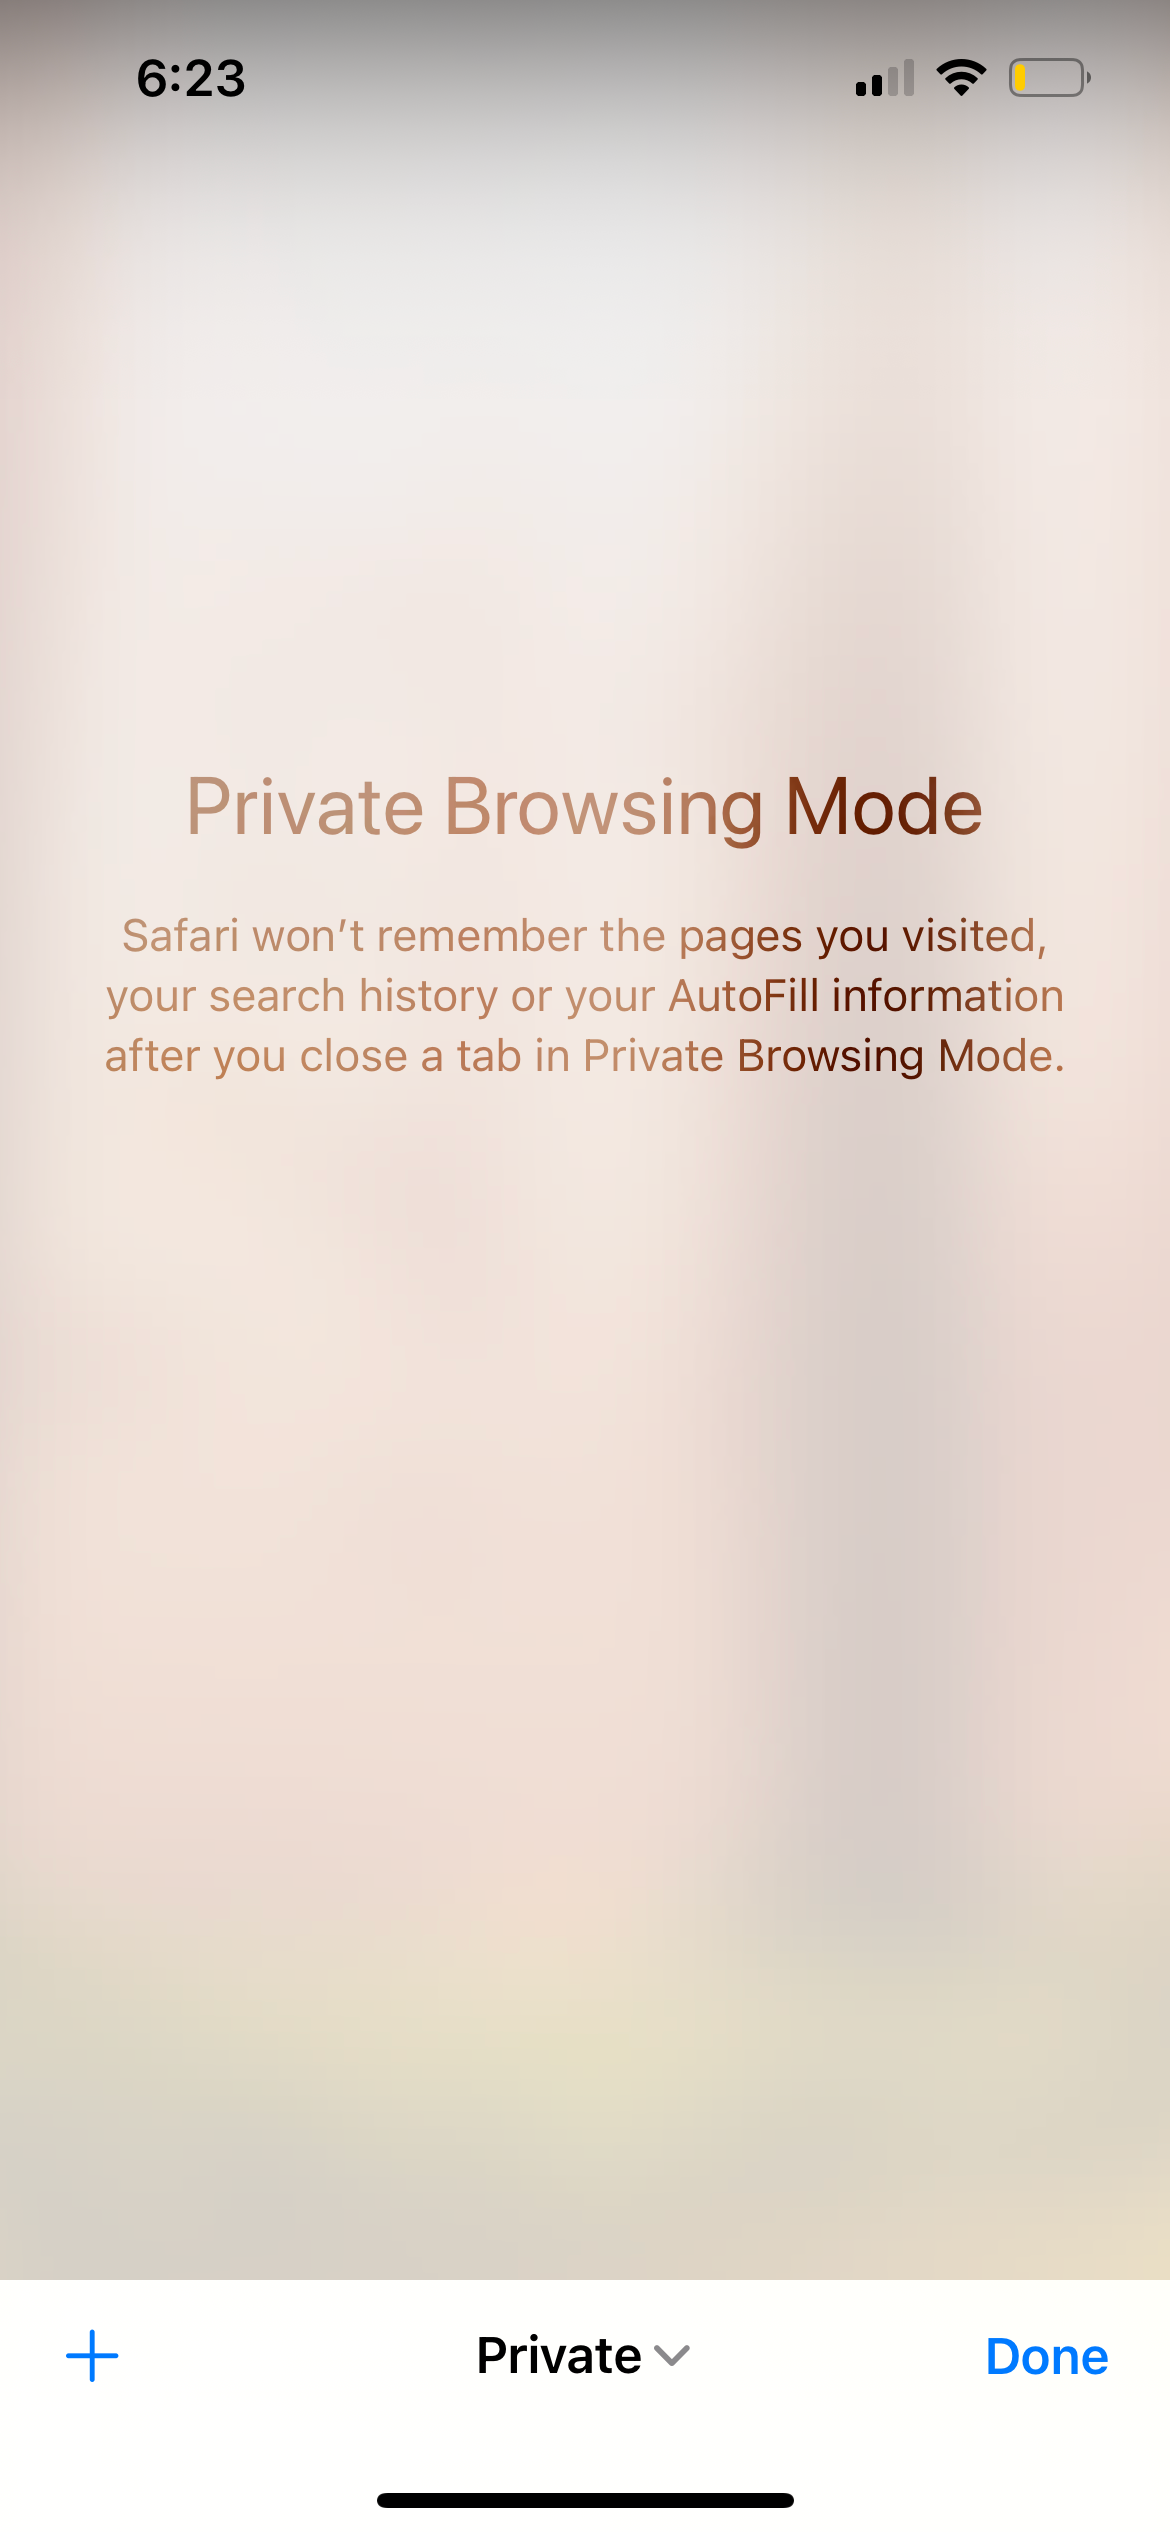 private browsing mode on safari app